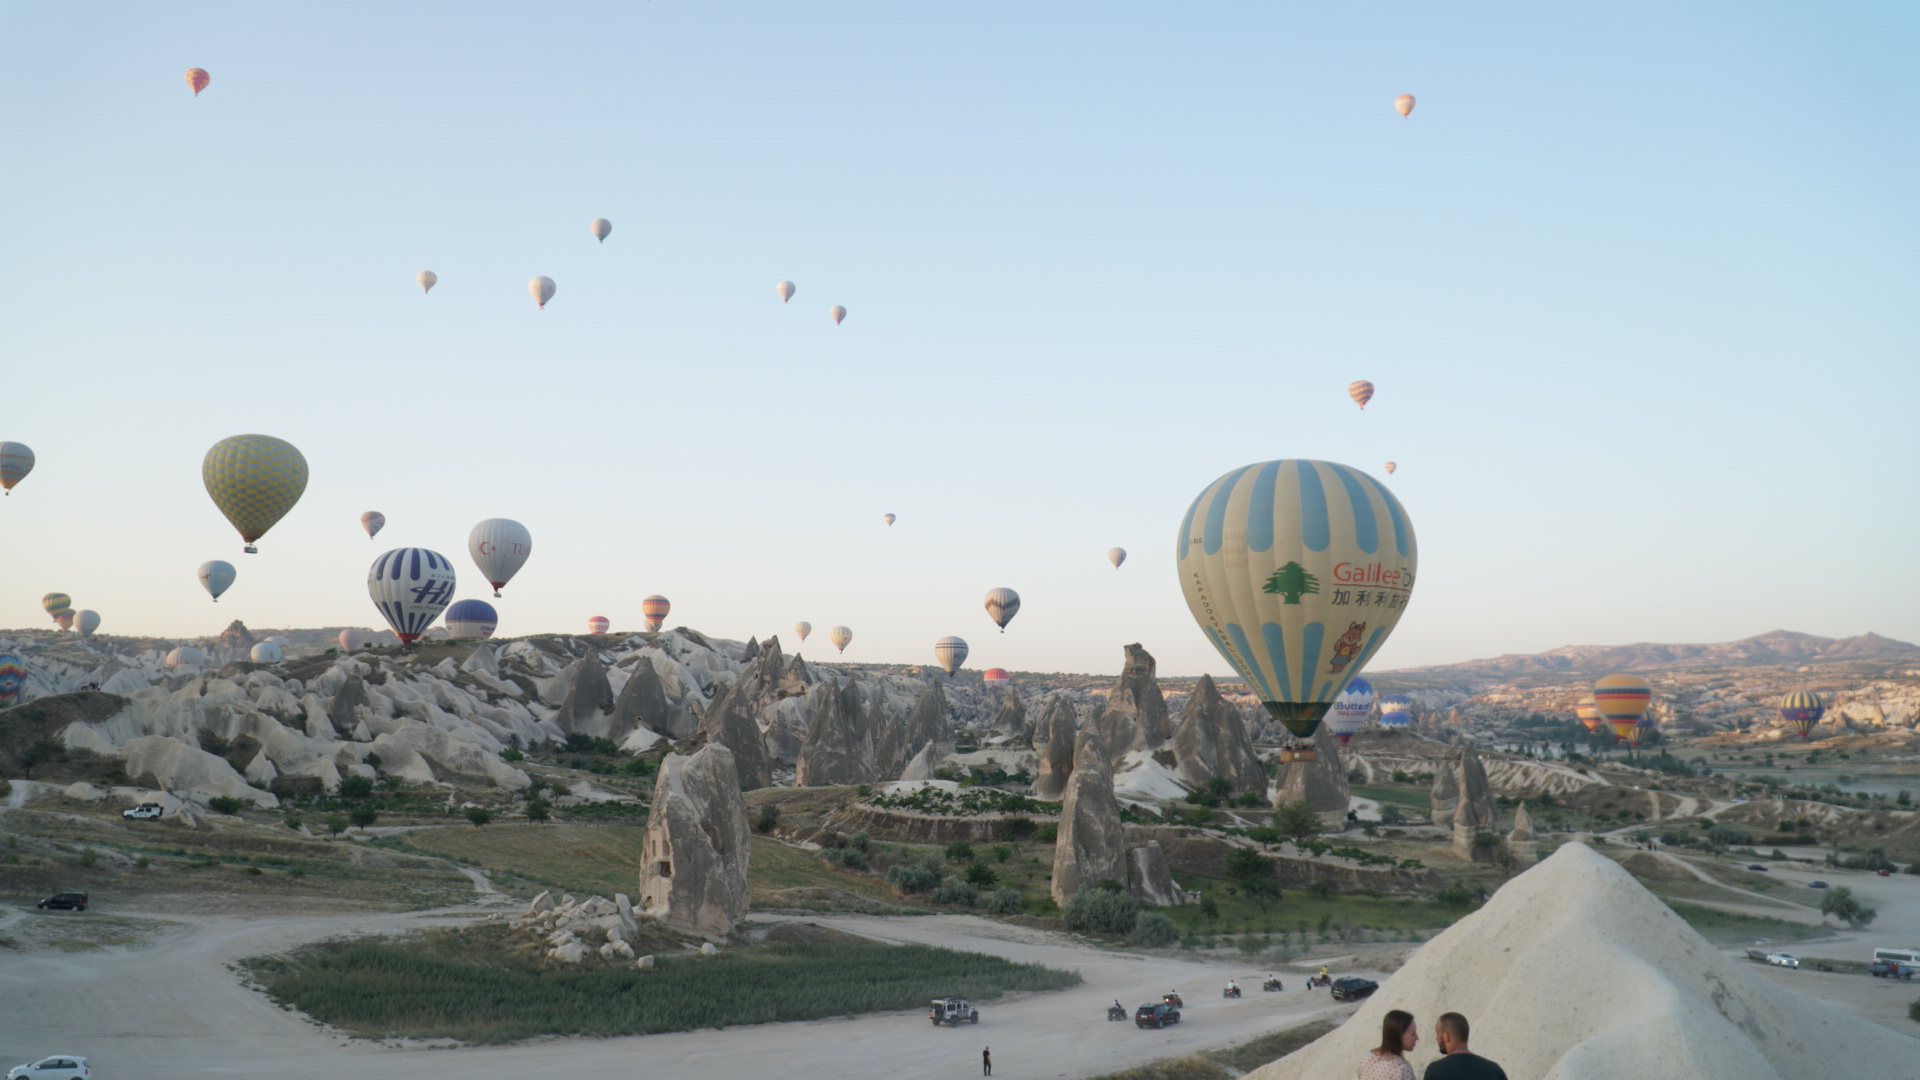 Mongol rally: Short stop in Cappadocia, Turkey: Ascent of 100 hot air balloons